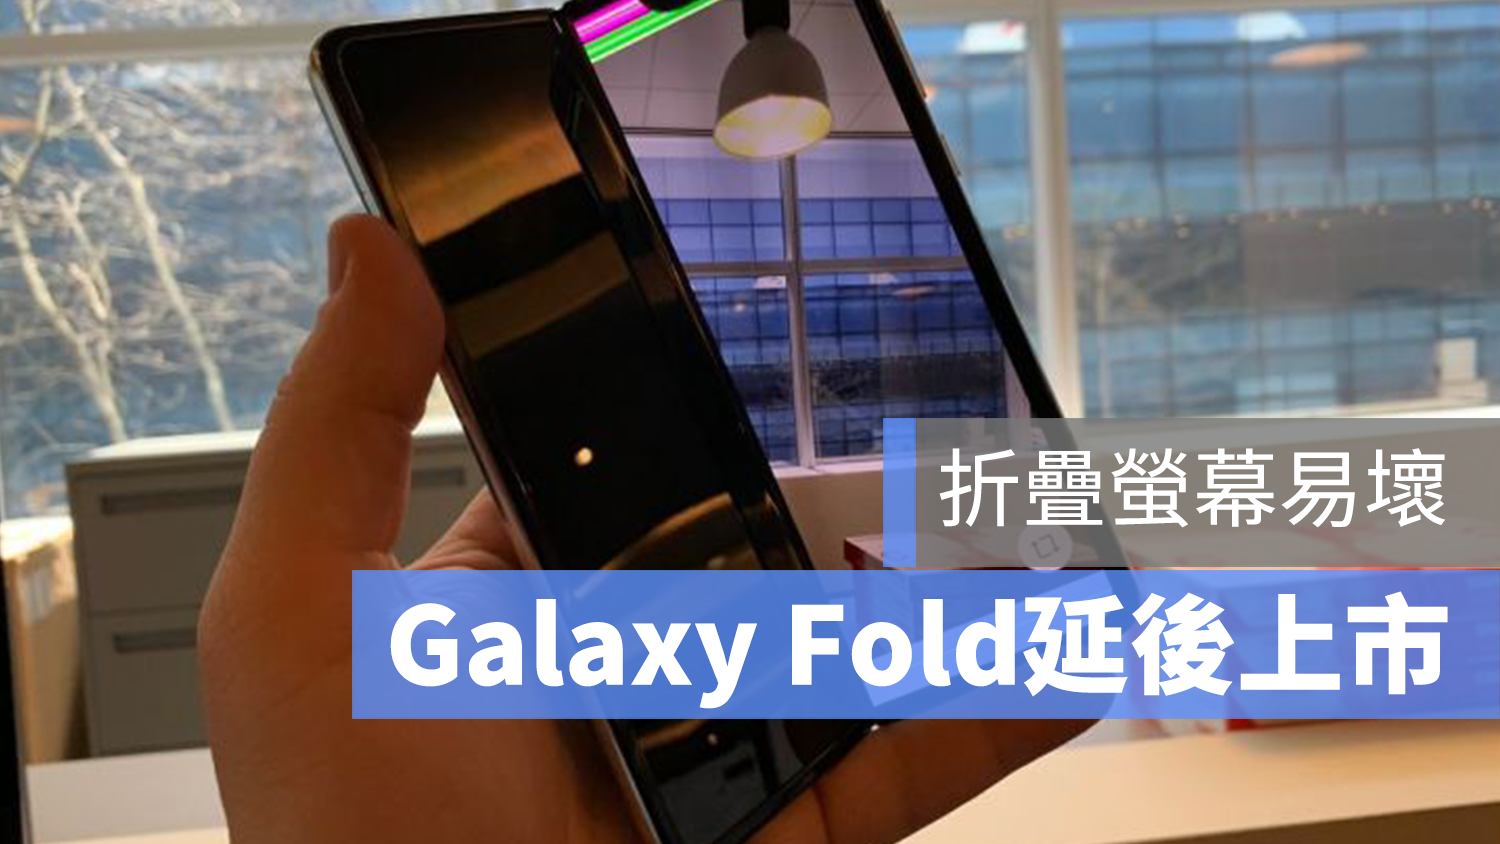 Galaxy Fold 上市